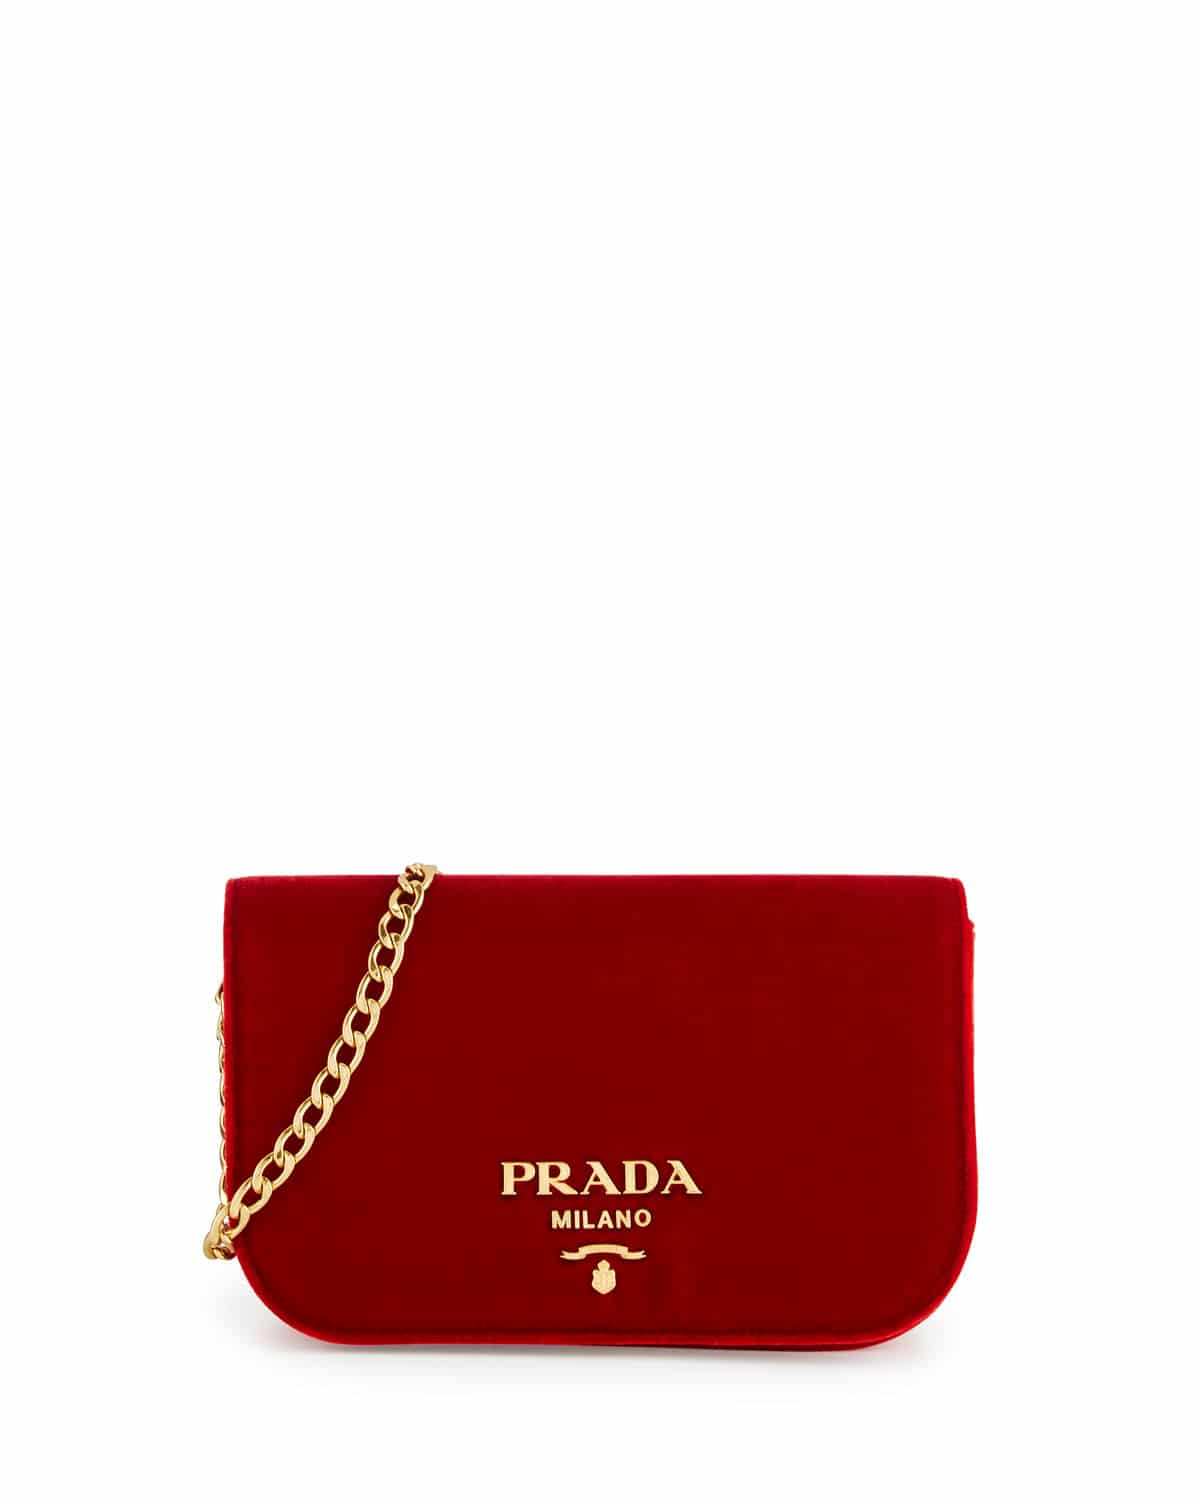 Prada Fall/Winter 2016 Bag Collection 